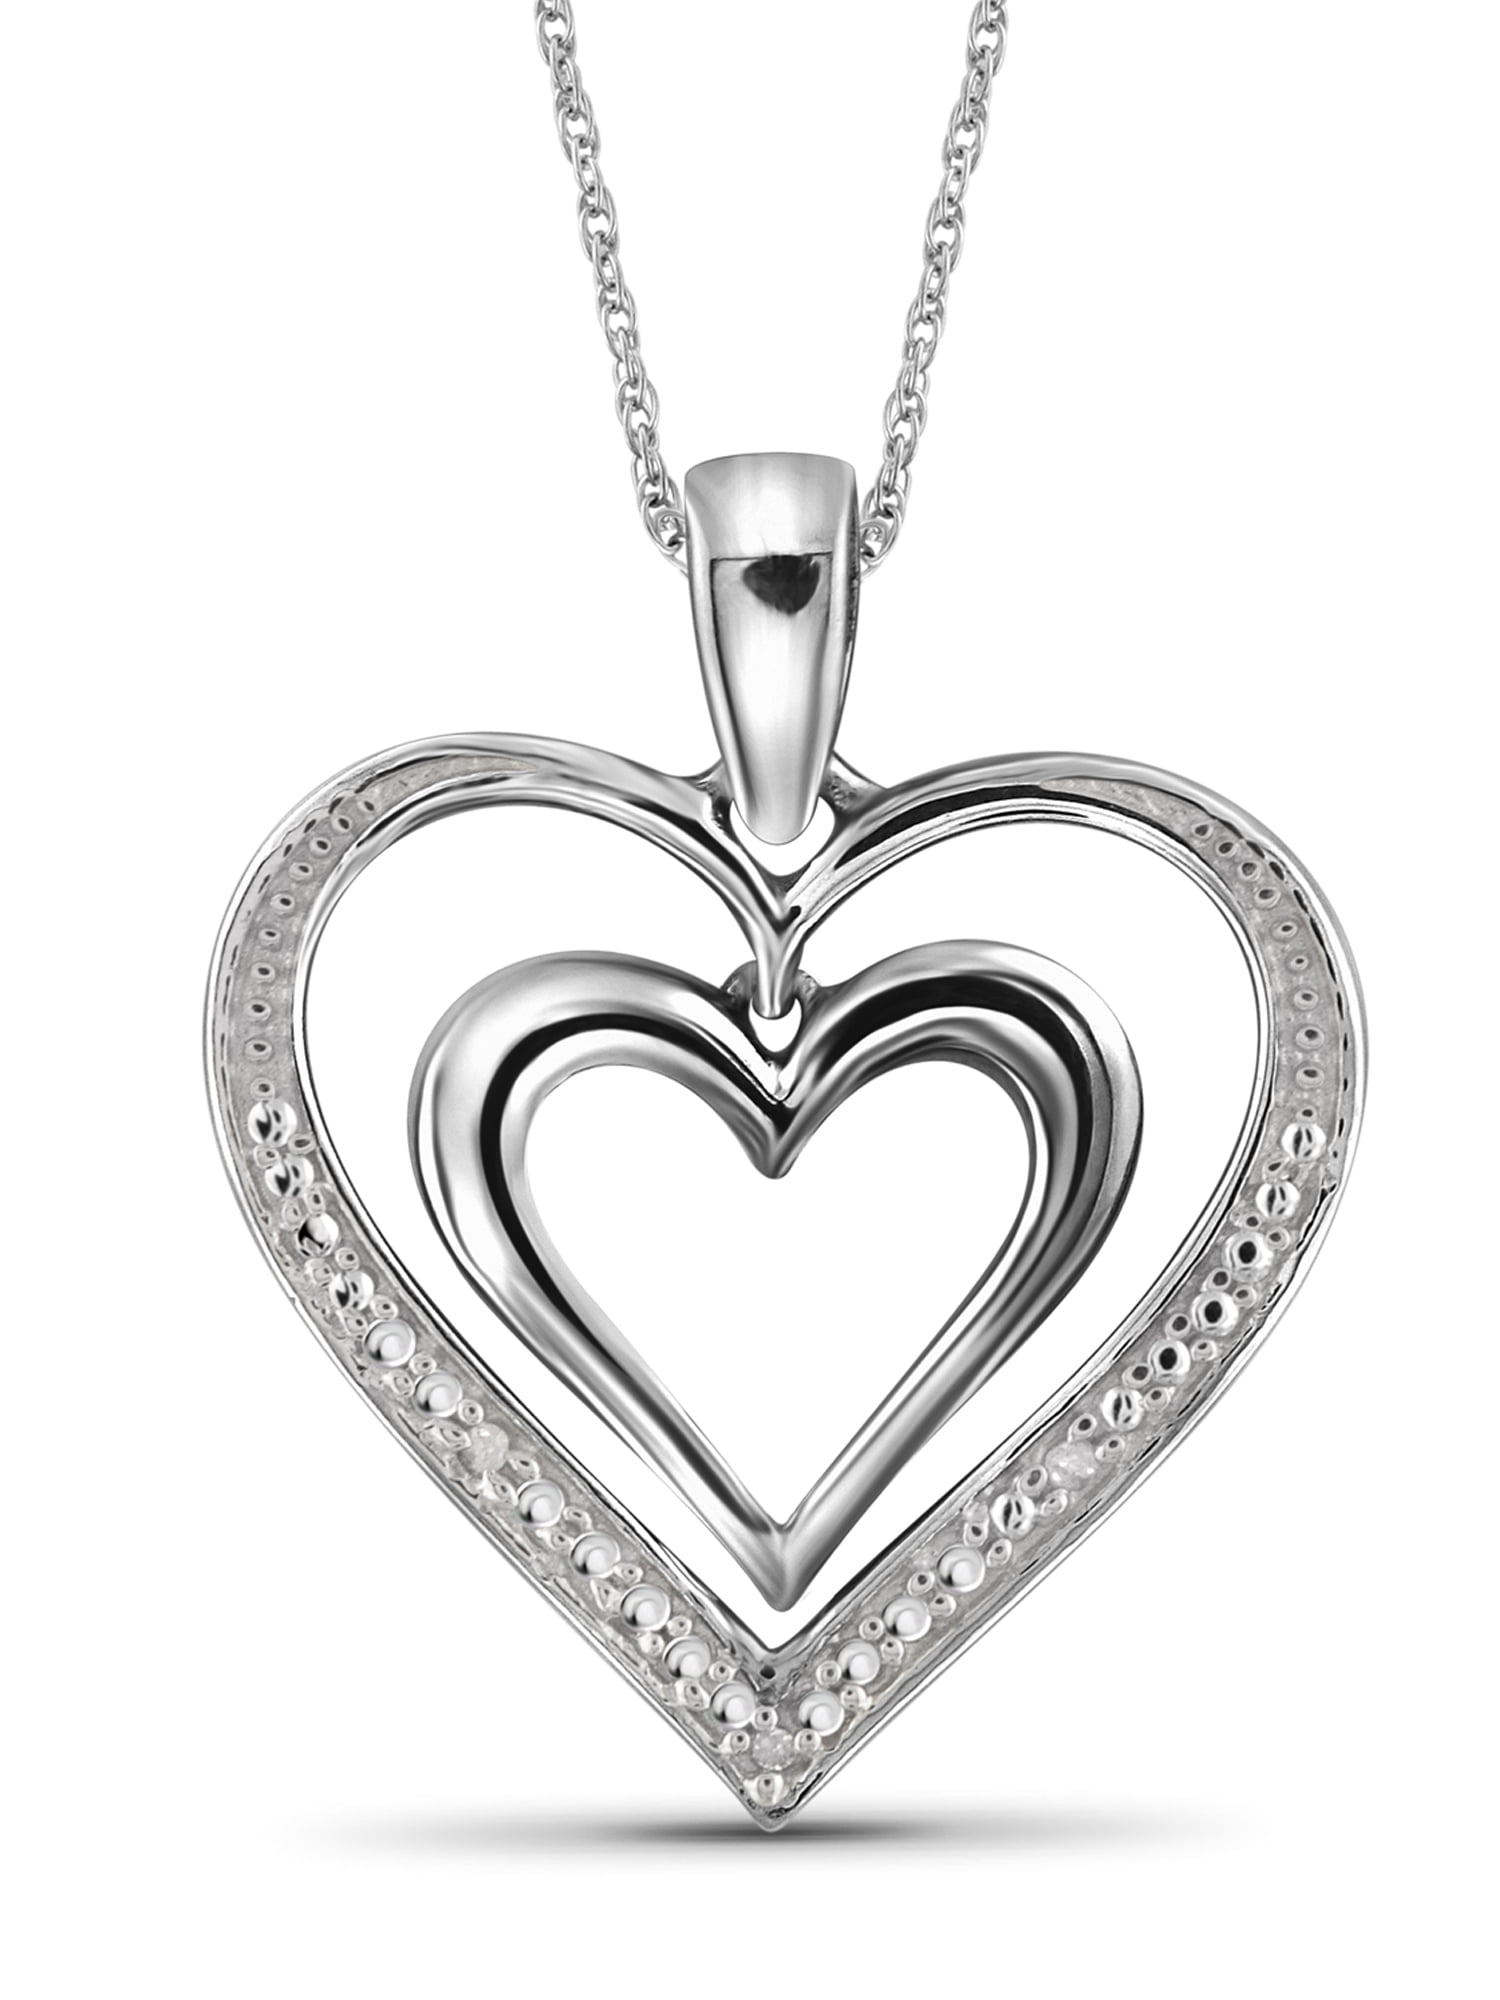 Designer Real Diamond Necklace for Women 14K White Gold 10 Carat 803205